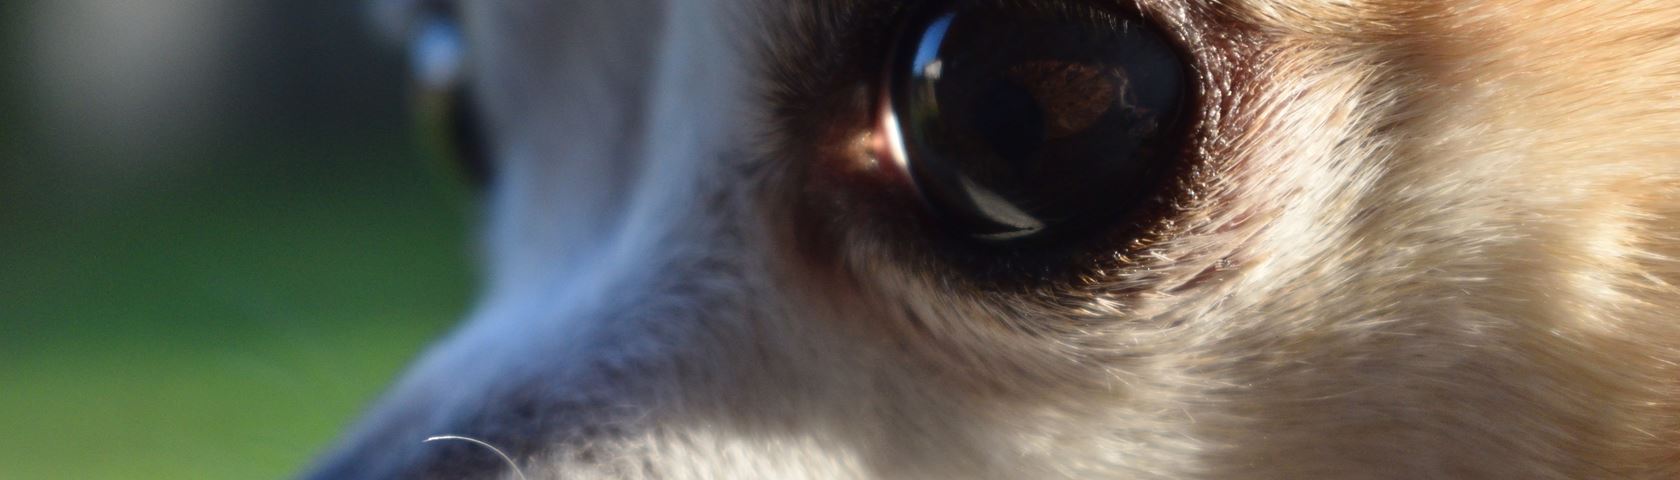 Chihuahua Eyes